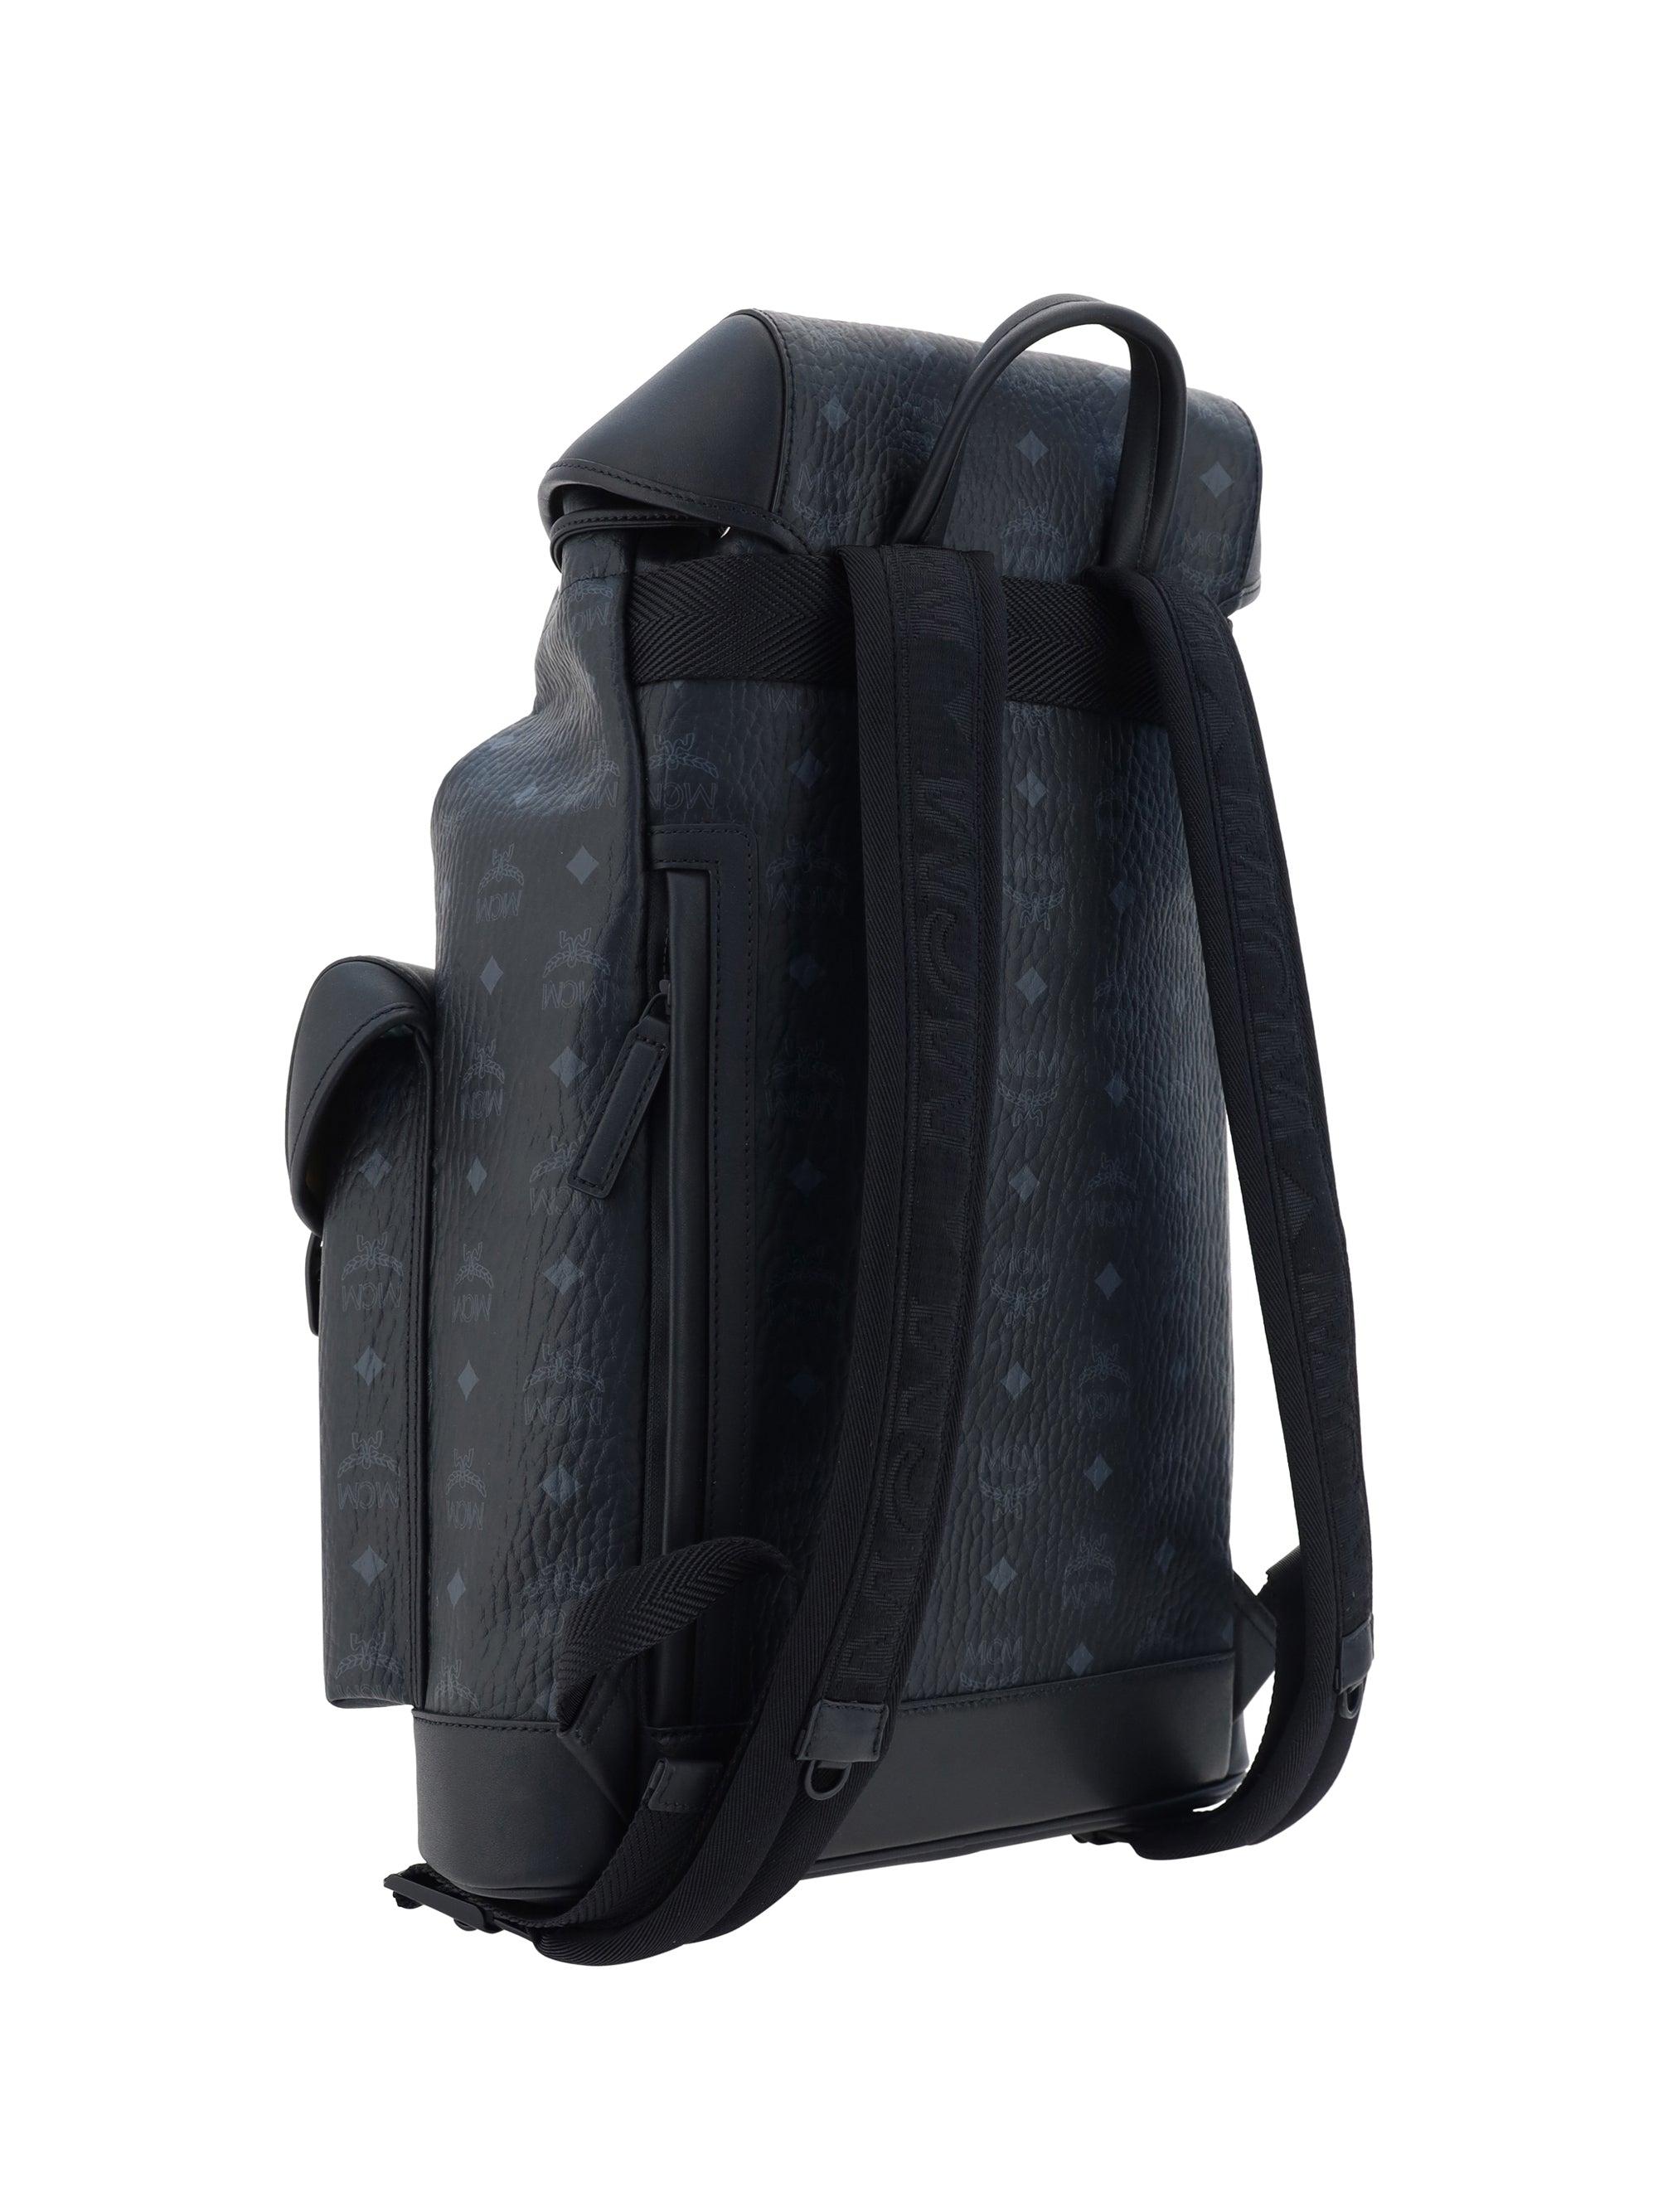 Medium Brandenburg Backpack in Visetos Black